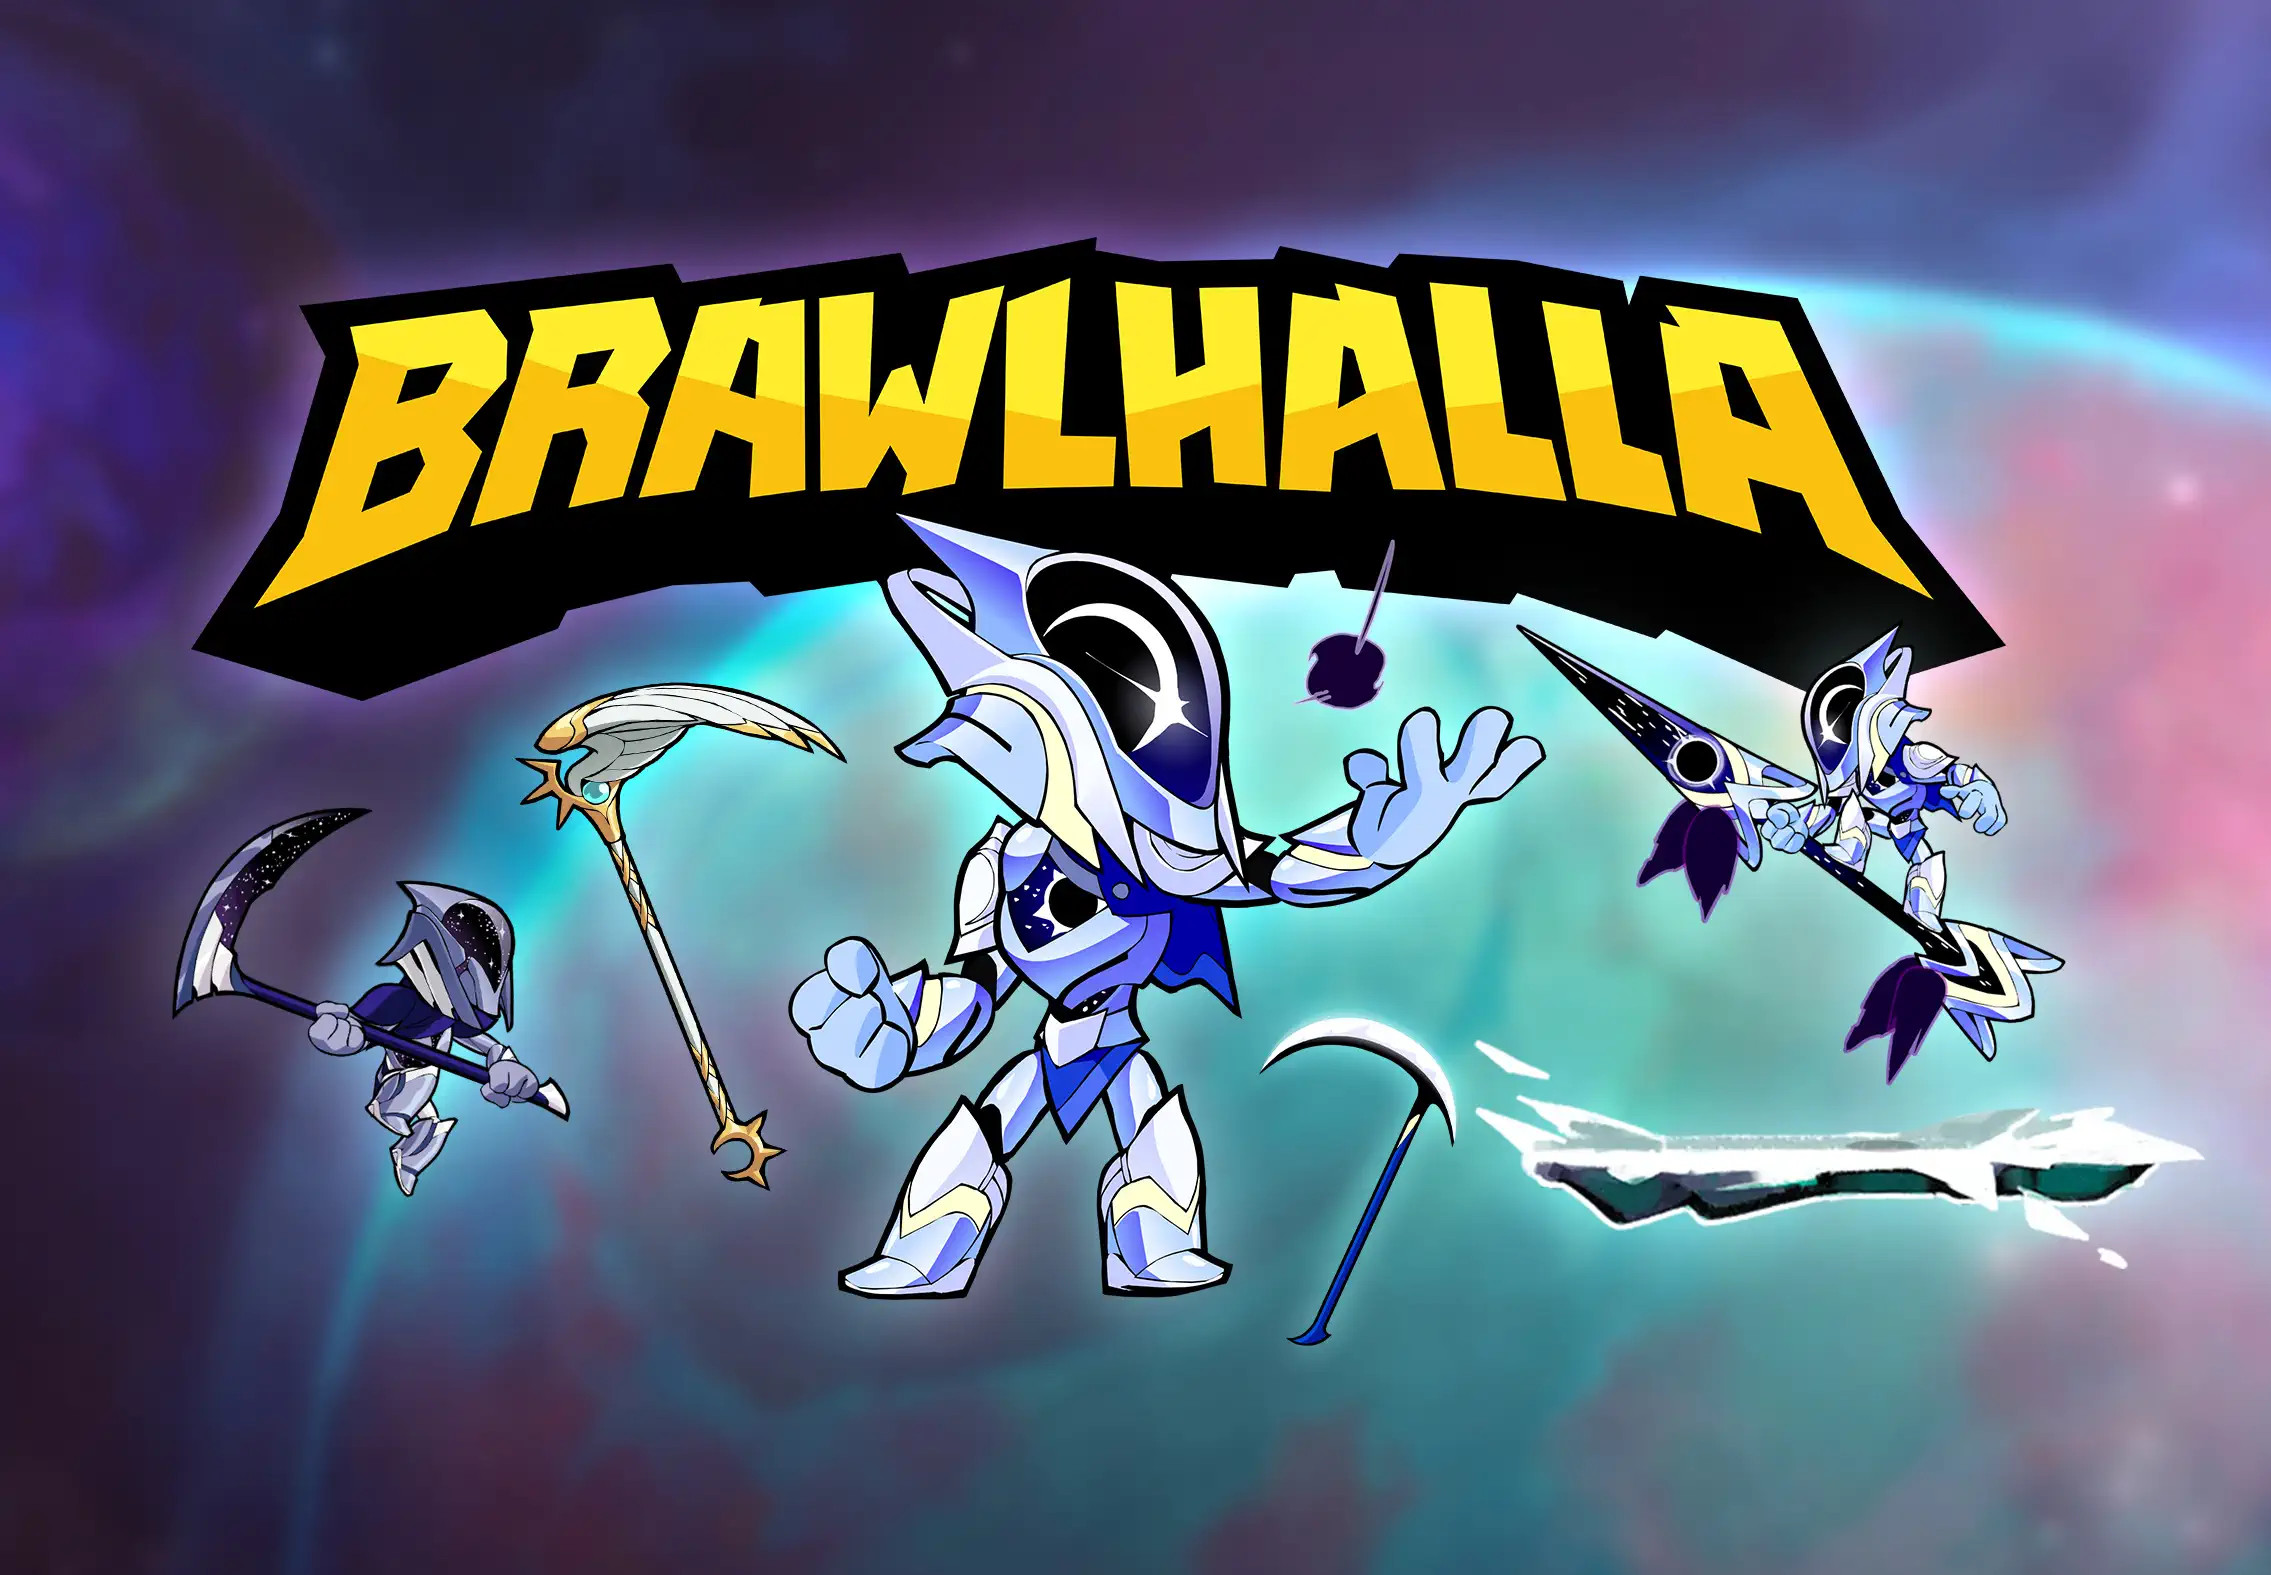 Brawlhalla - Eclipse Bundle DLC CD Key